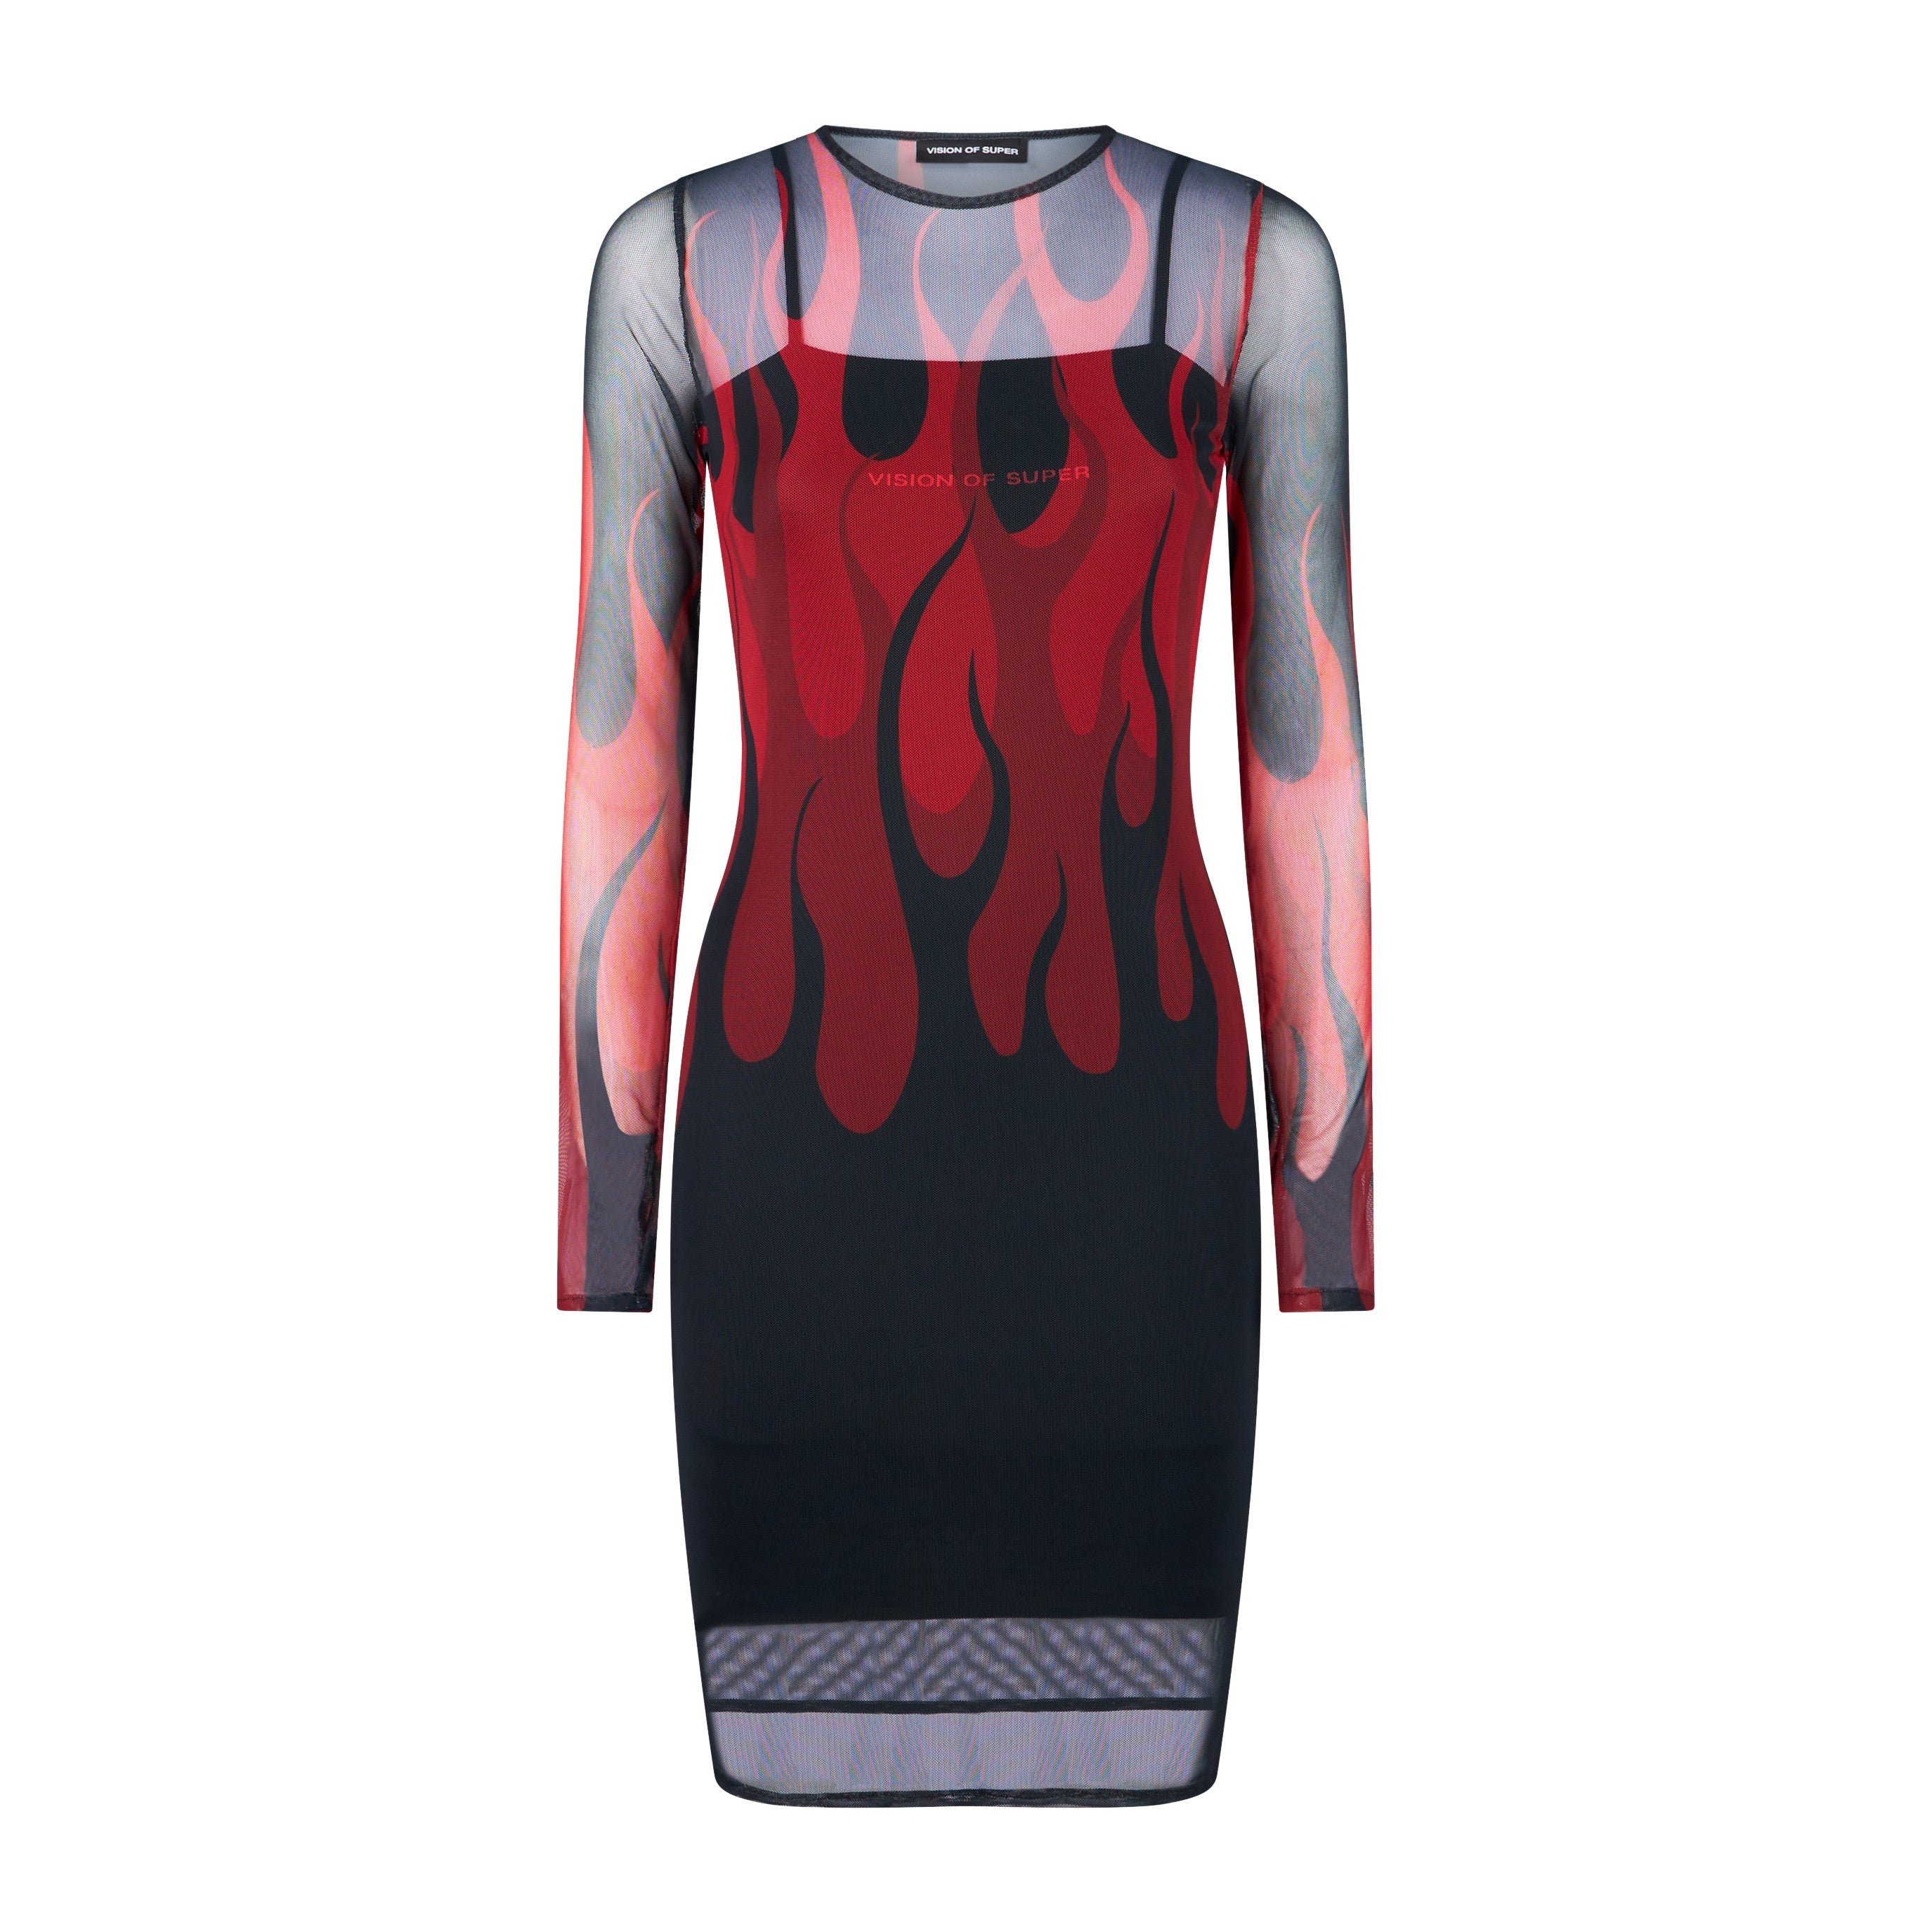 Women's Flames Dress Black/red